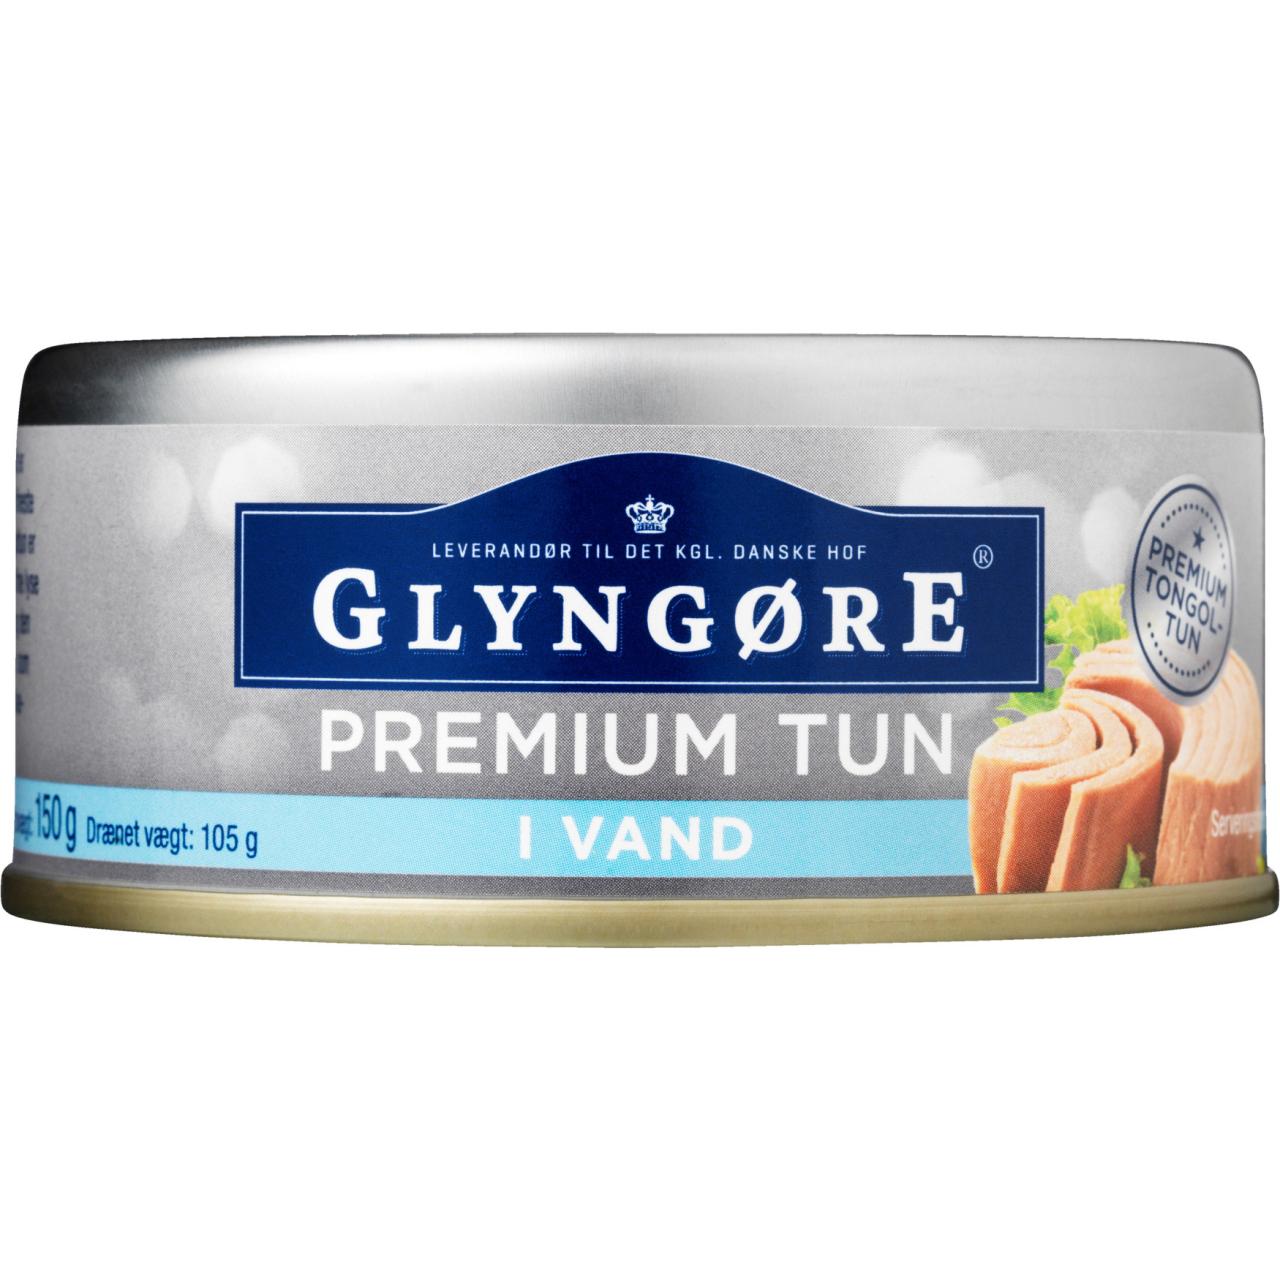 Glyngøre Premium Tun i Vand/Thunfisch in Aufguß 150/105g